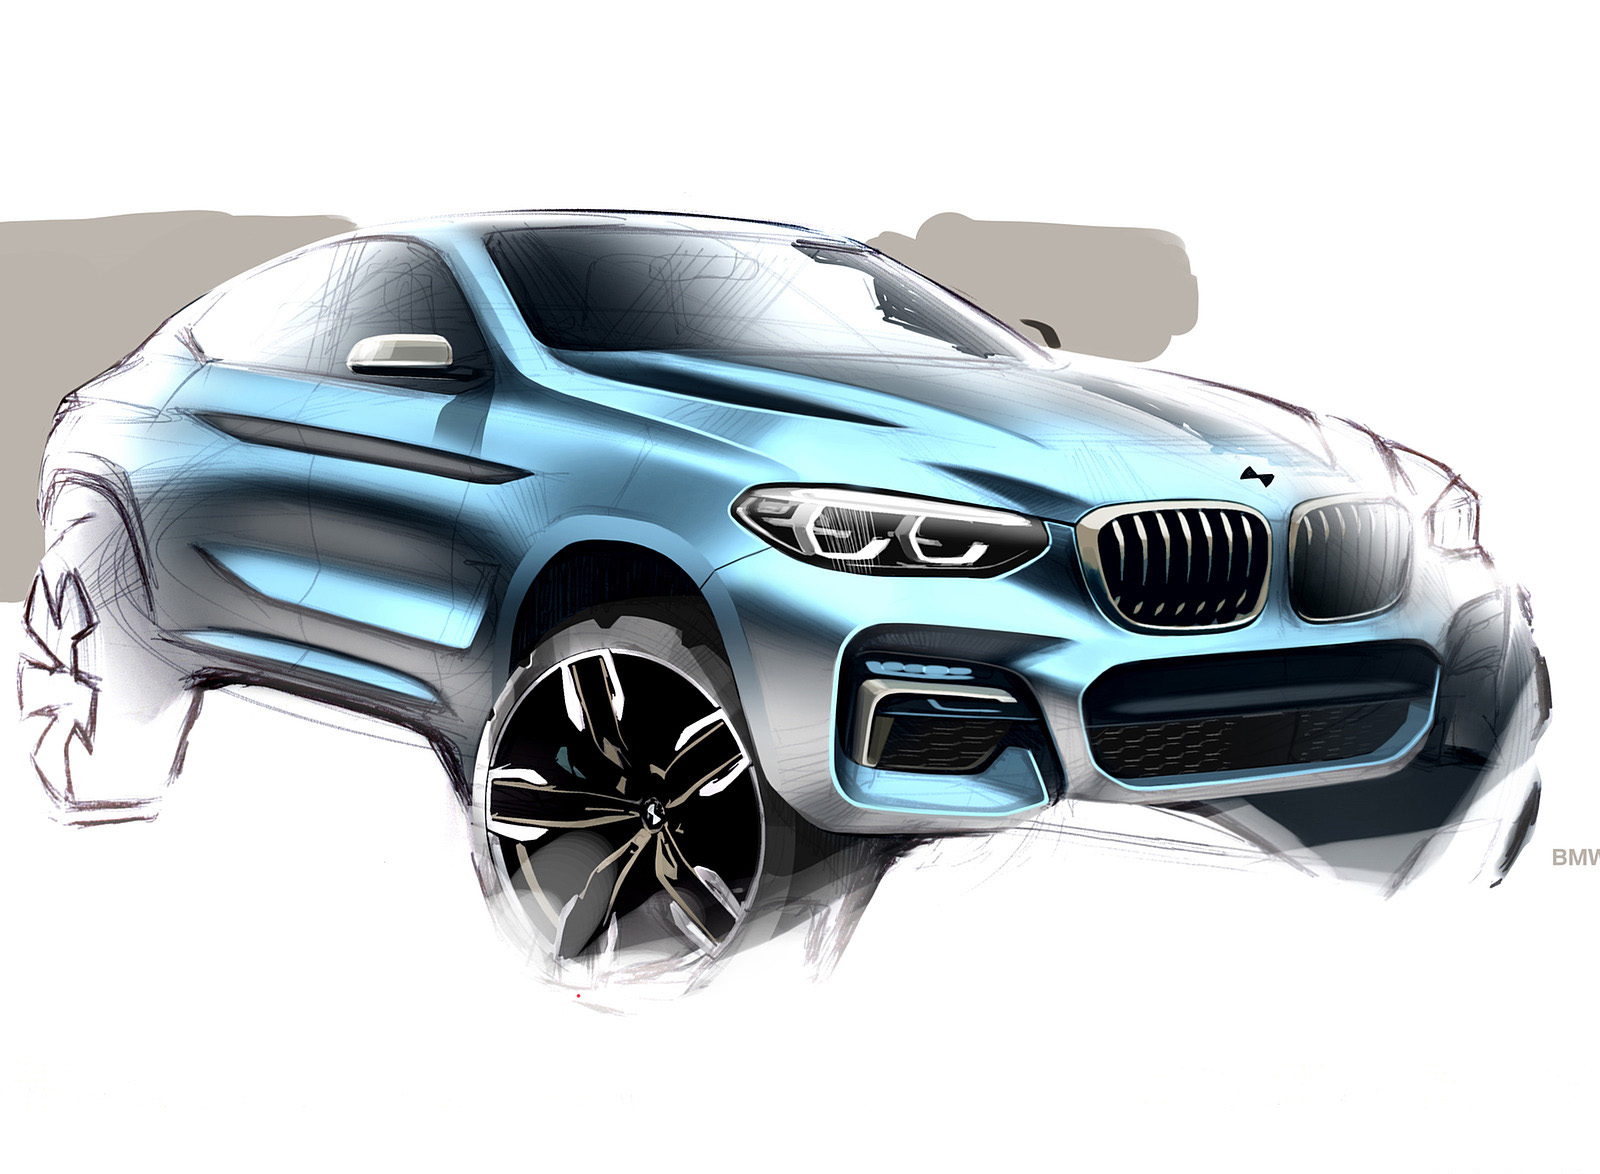 2019 BMW X4 M40d Design Sketch Wallpapers  #200 of 202